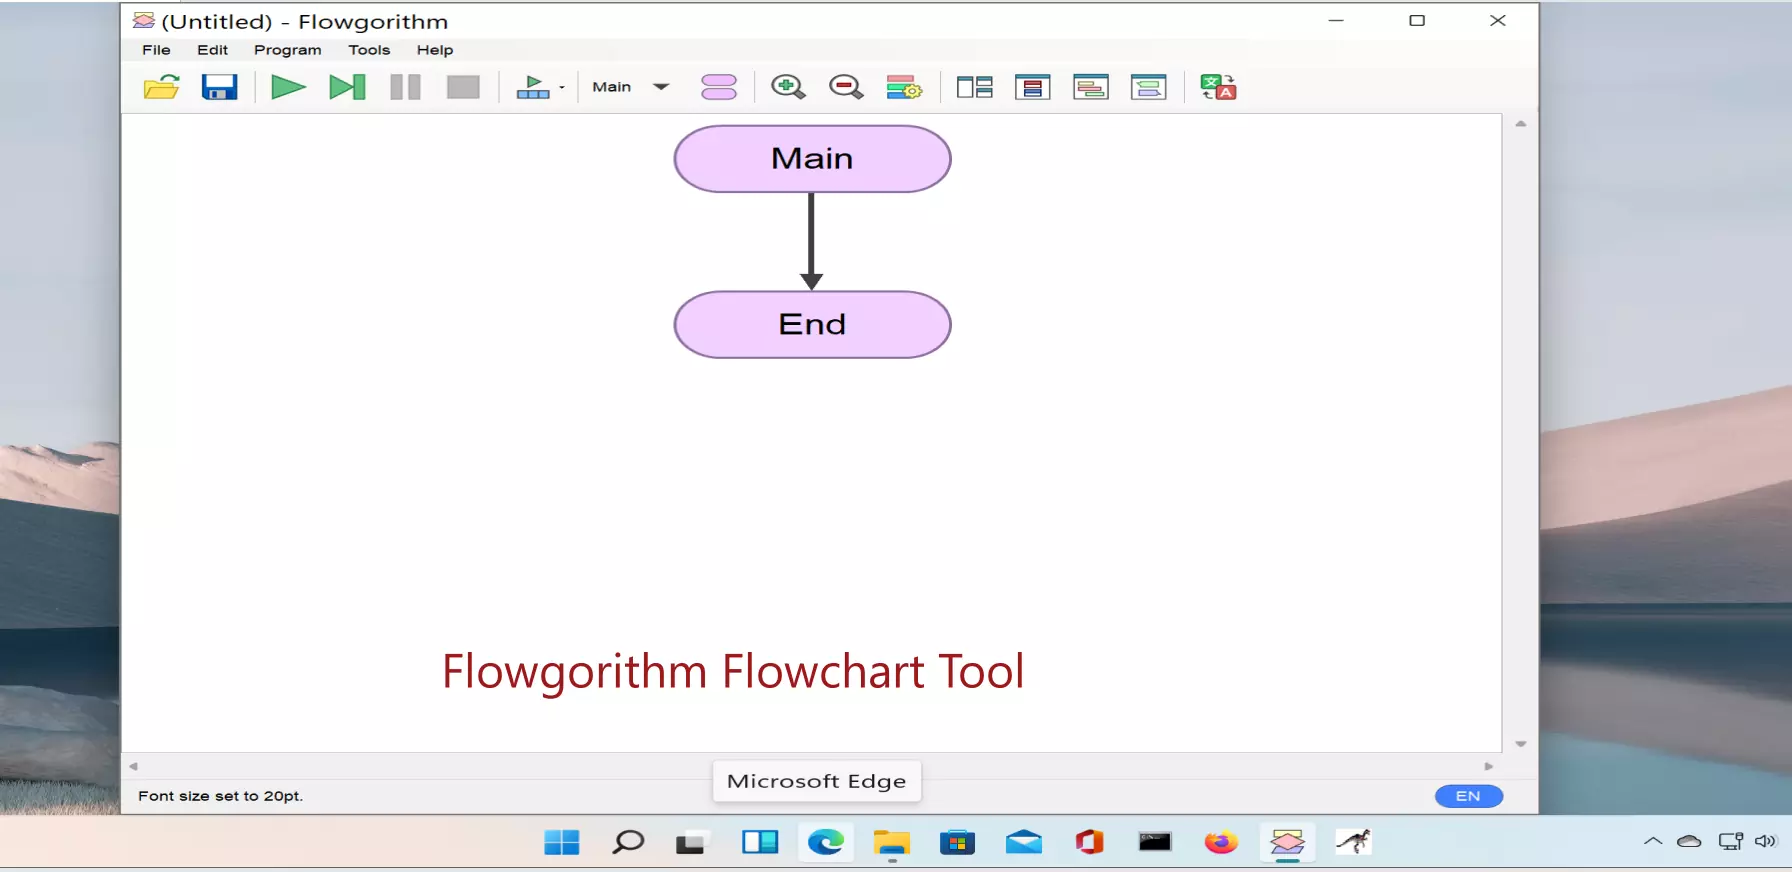 Flowgorithm Flowchart Tool